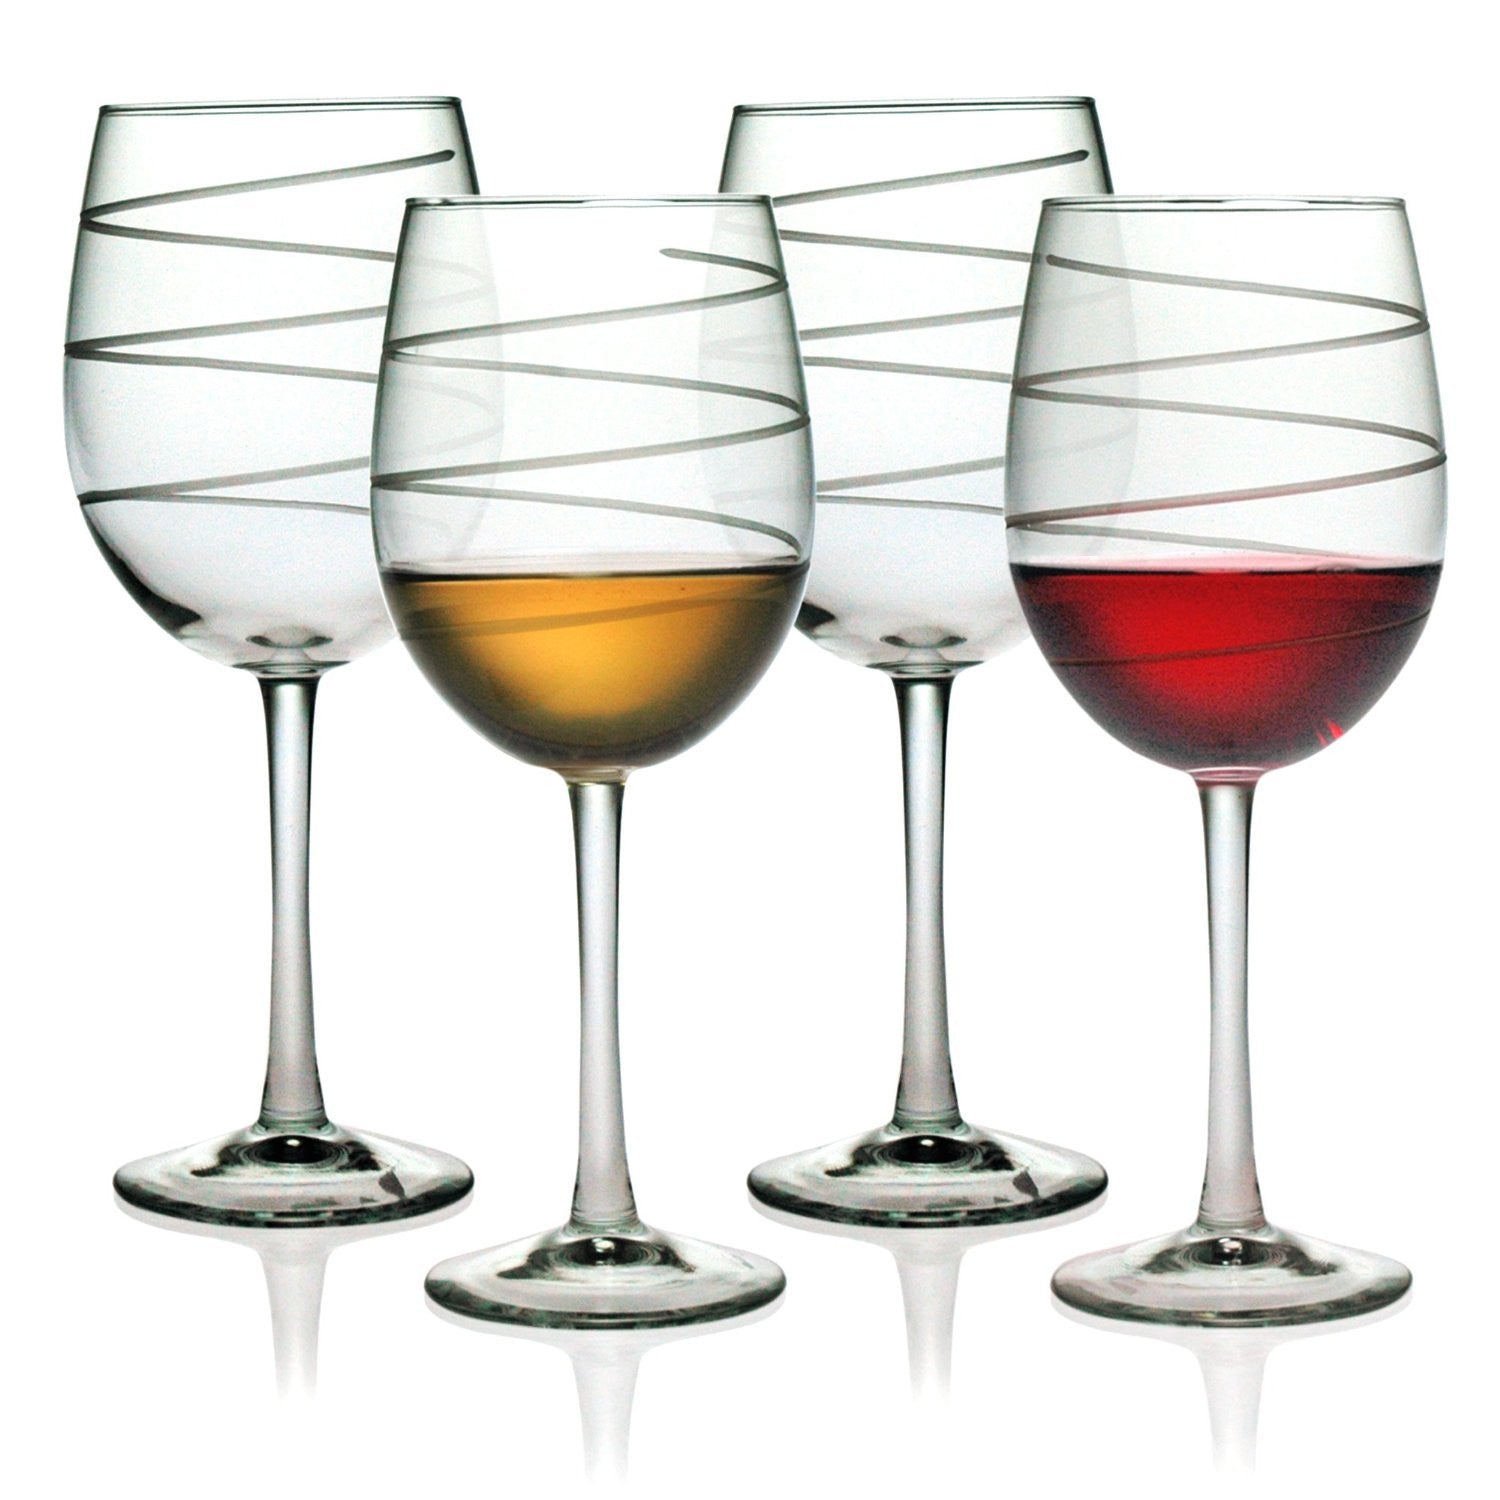 Spiral Design Wine Glasses